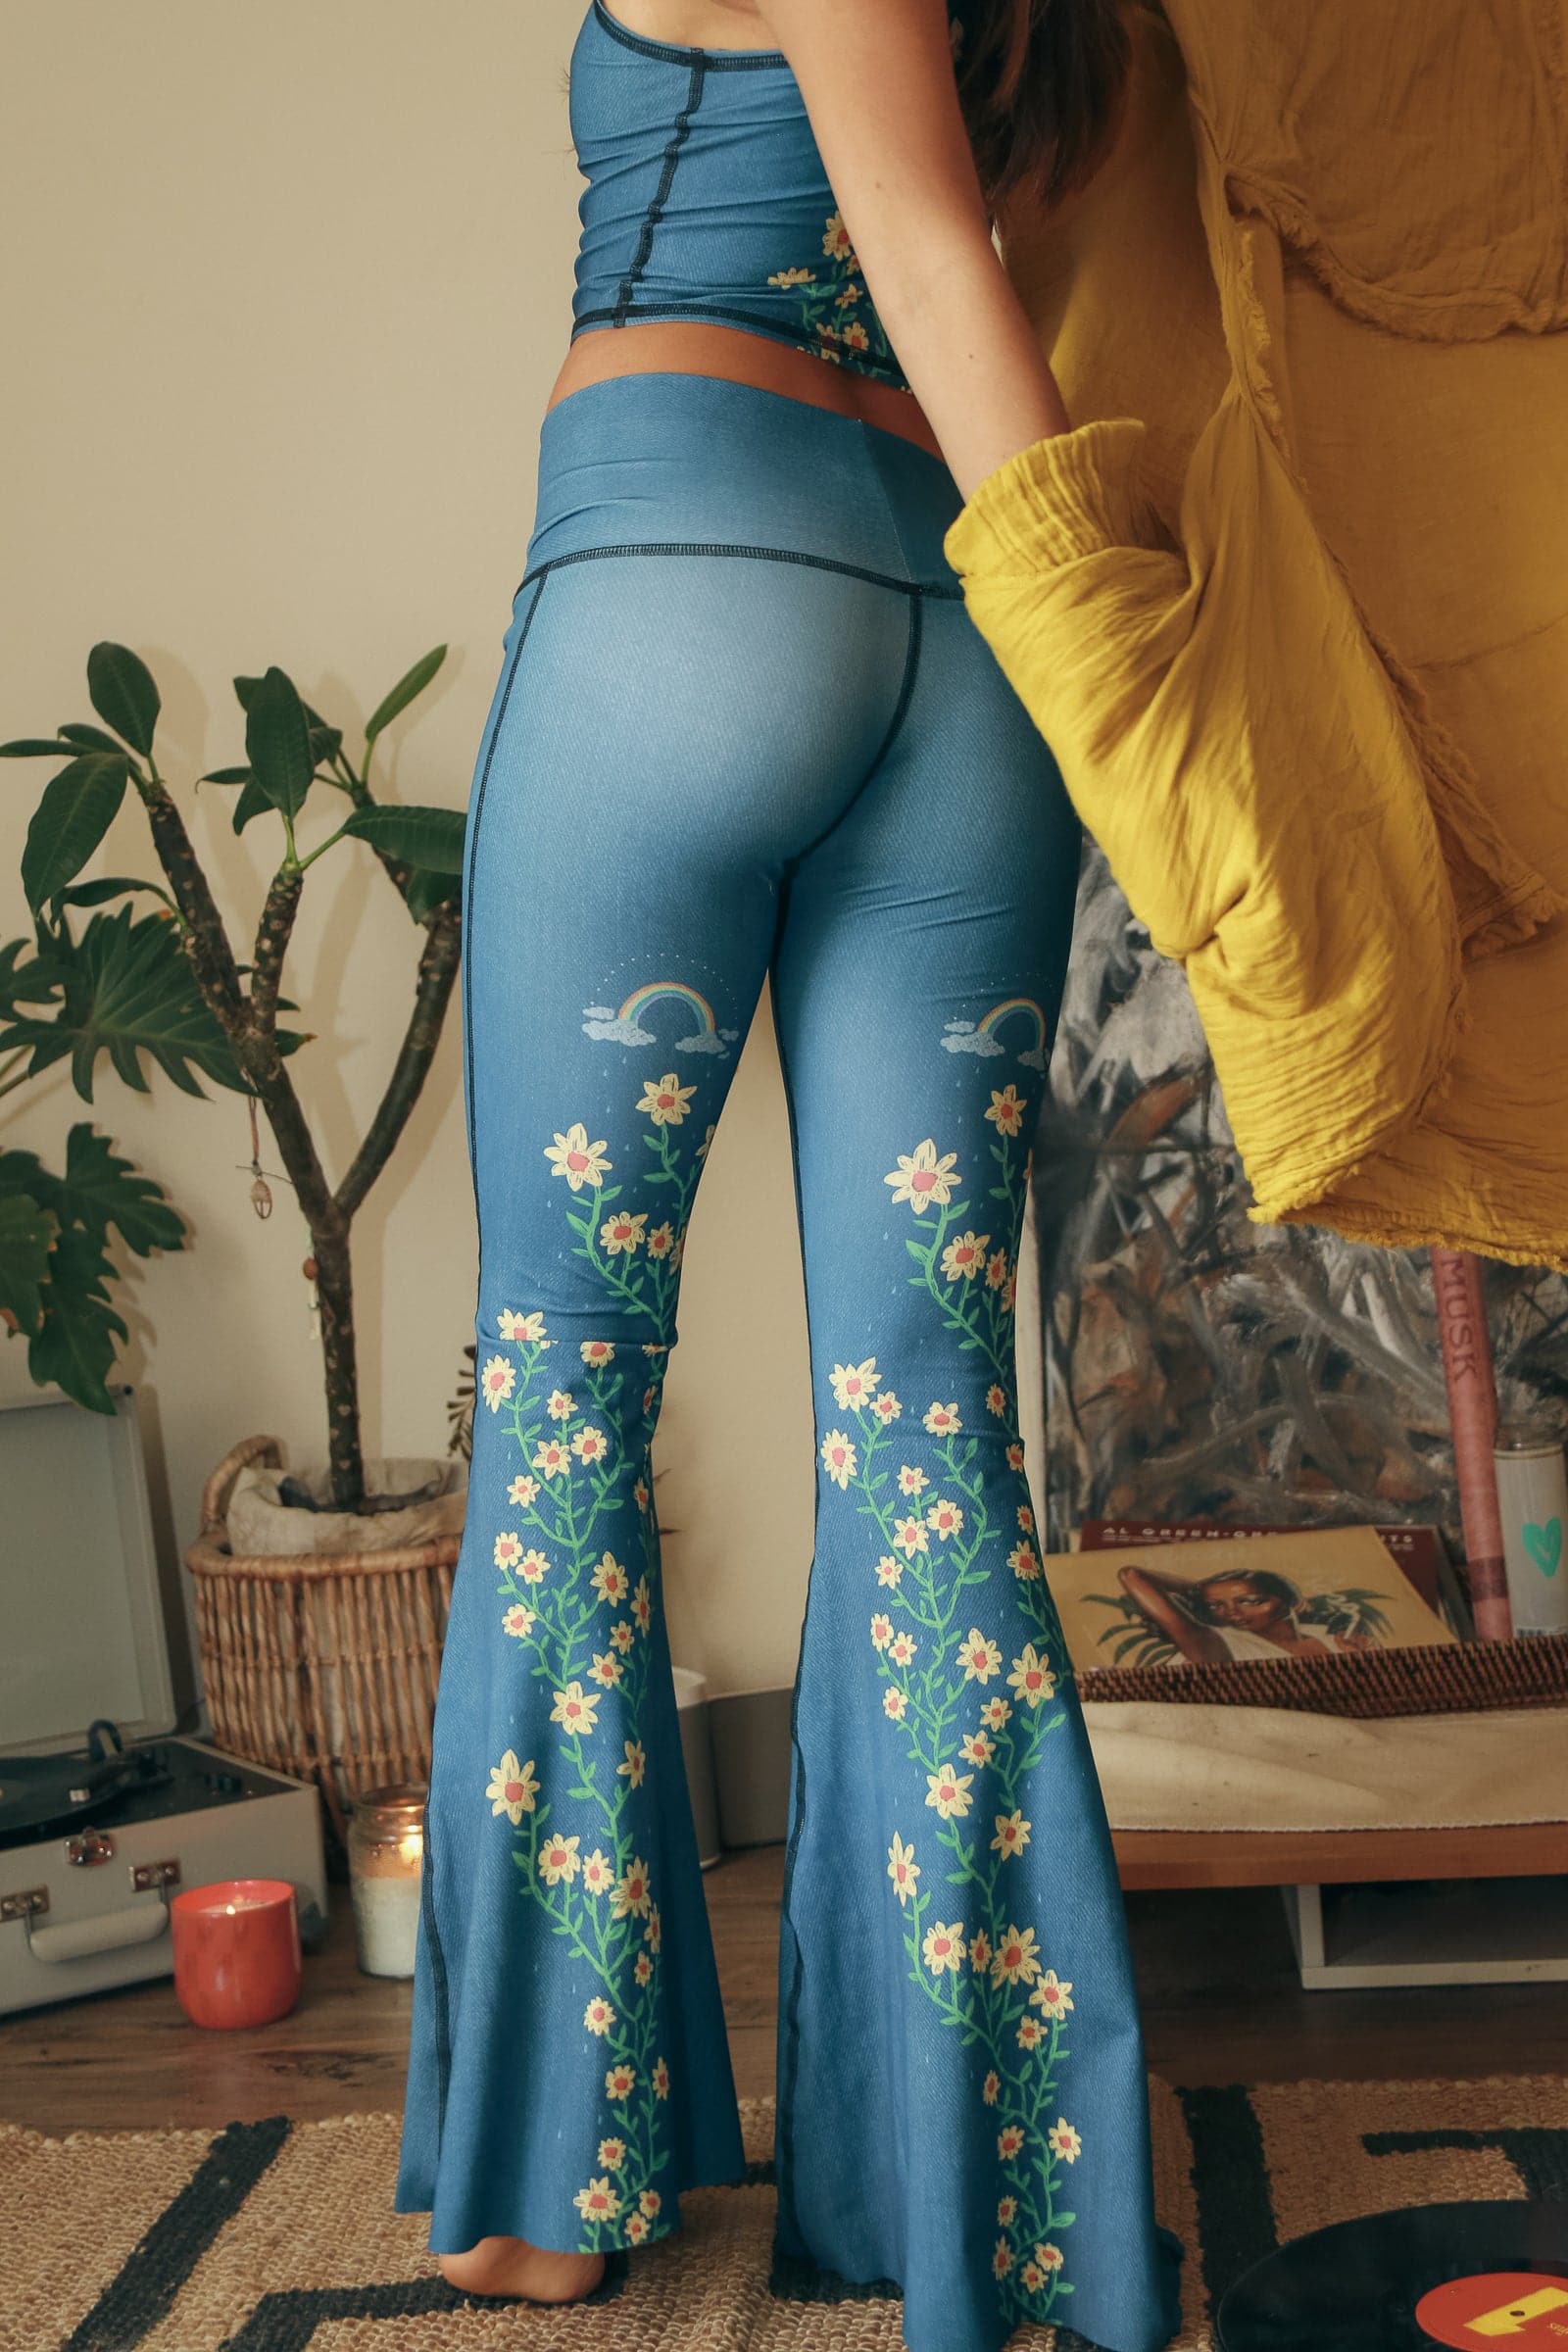 teeki Mermaid Fairy Queen Lavender Hot Pant Leggings for Women - X-Small at   Women's Clothing store